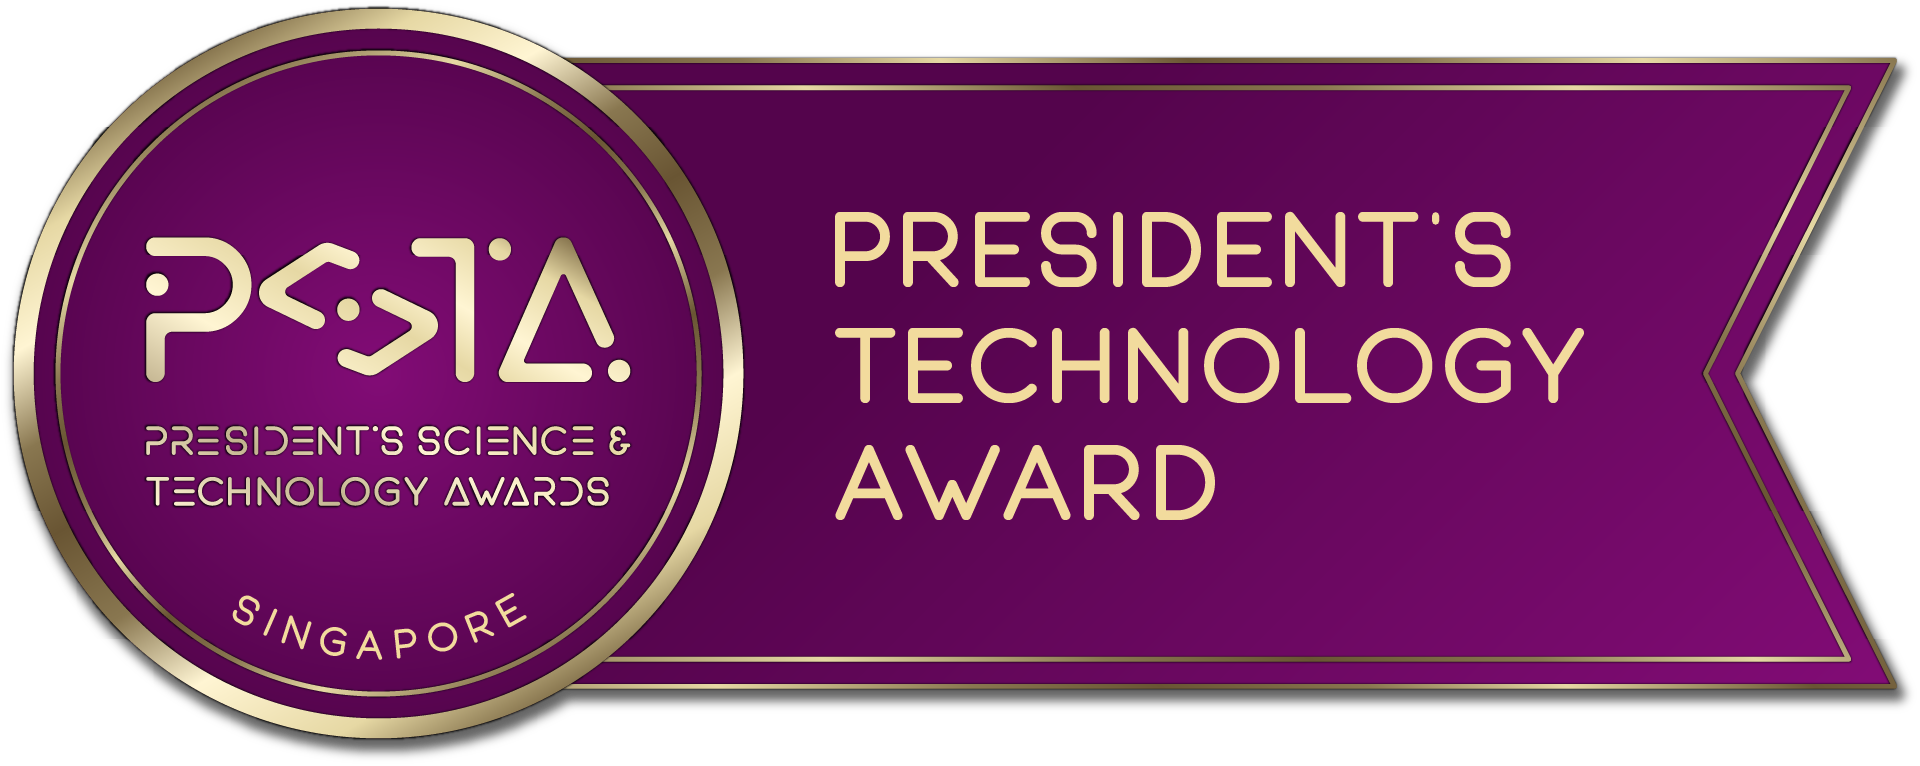 President’s Technology Award (PTA)